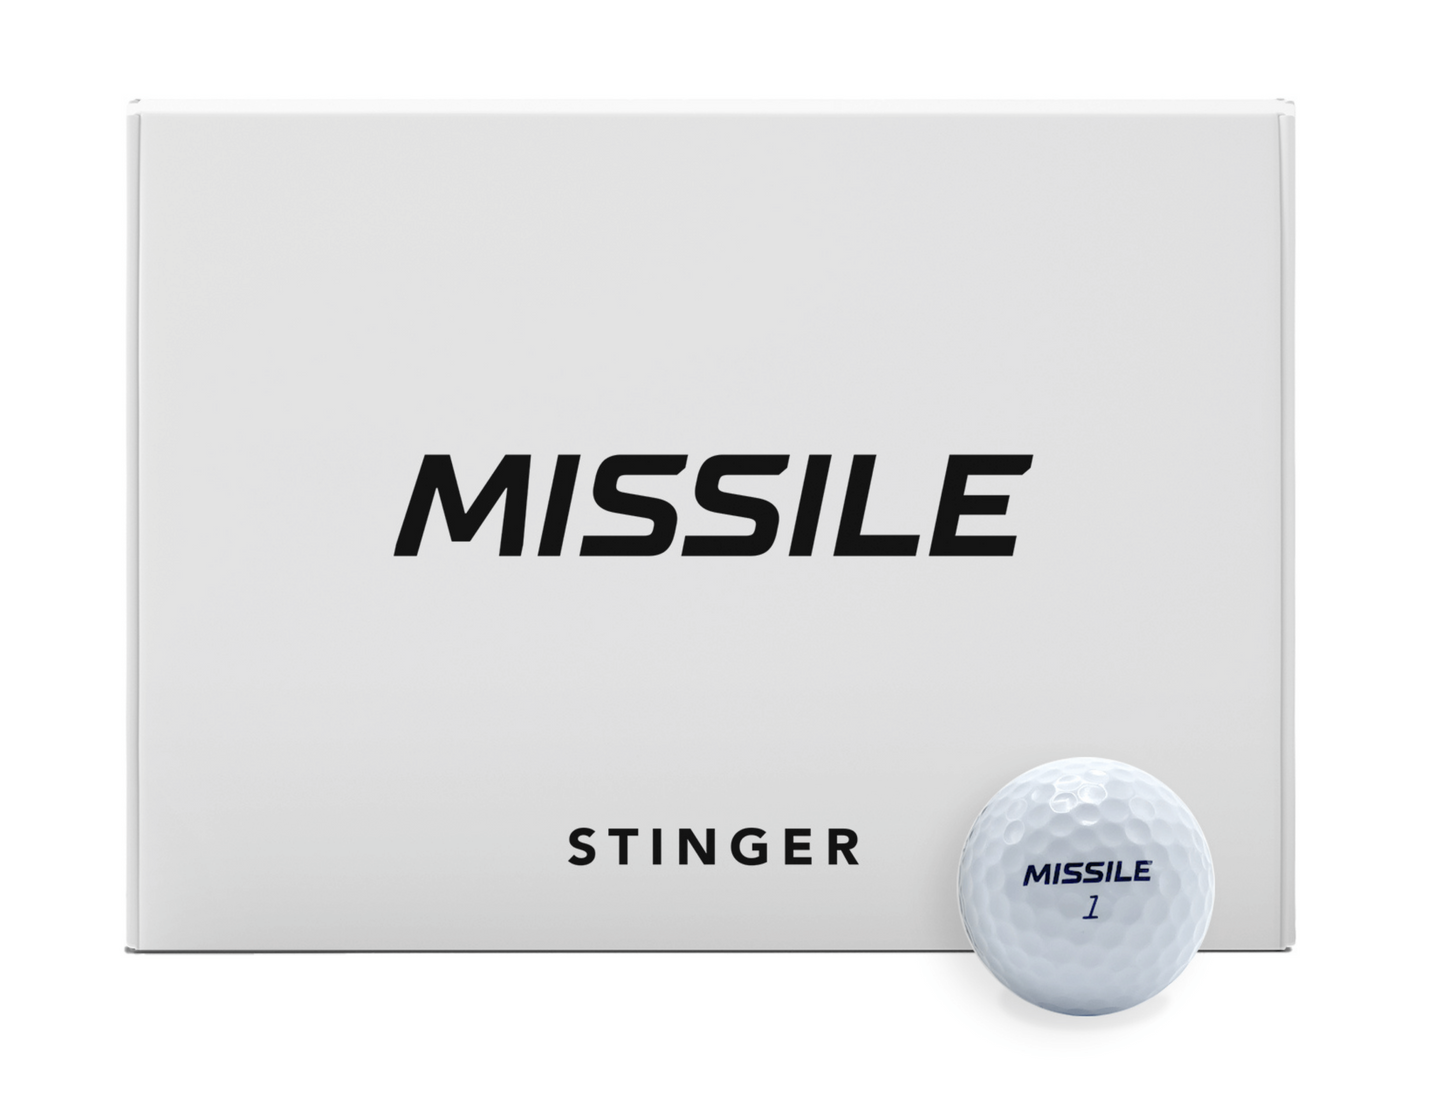 The STINGER Missile